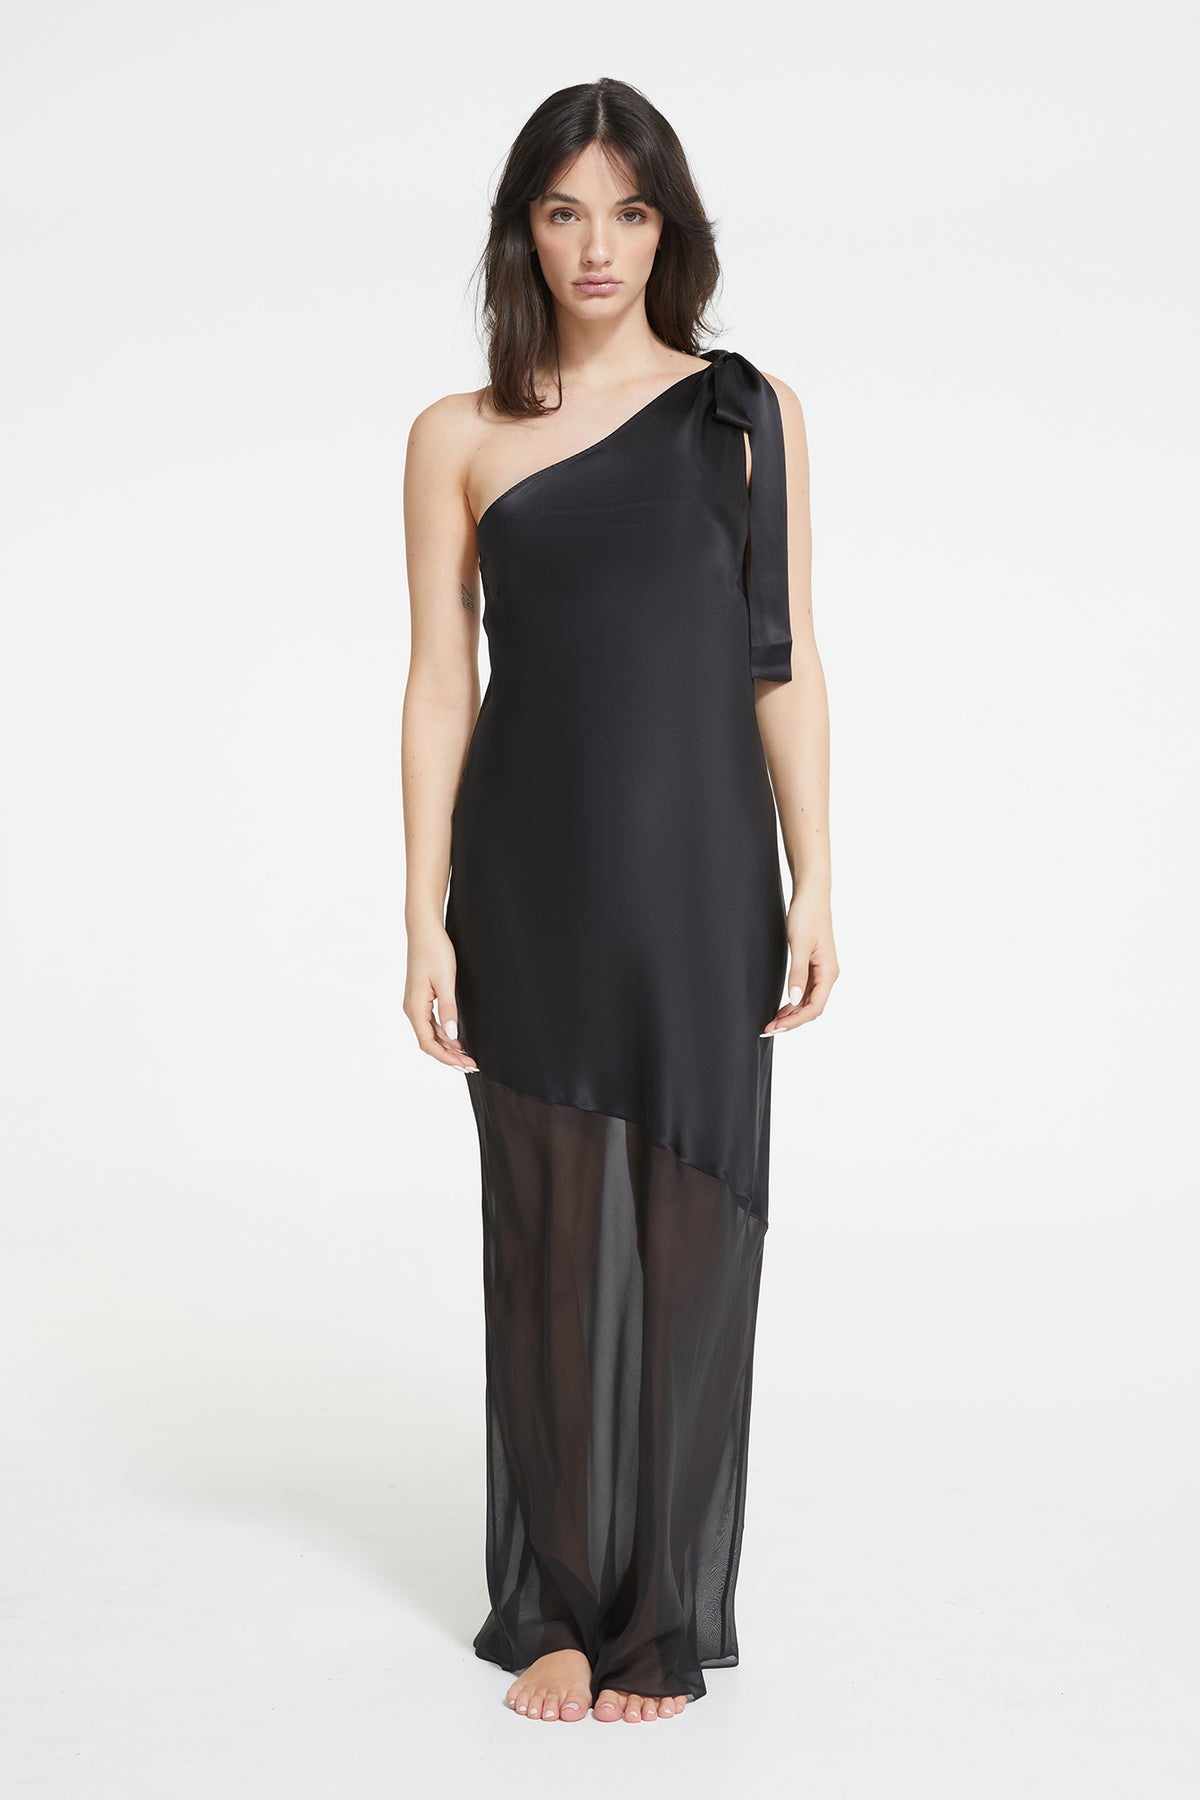 The Moonlight Midi in Black - 100% Silk by Ginia Sleepwear